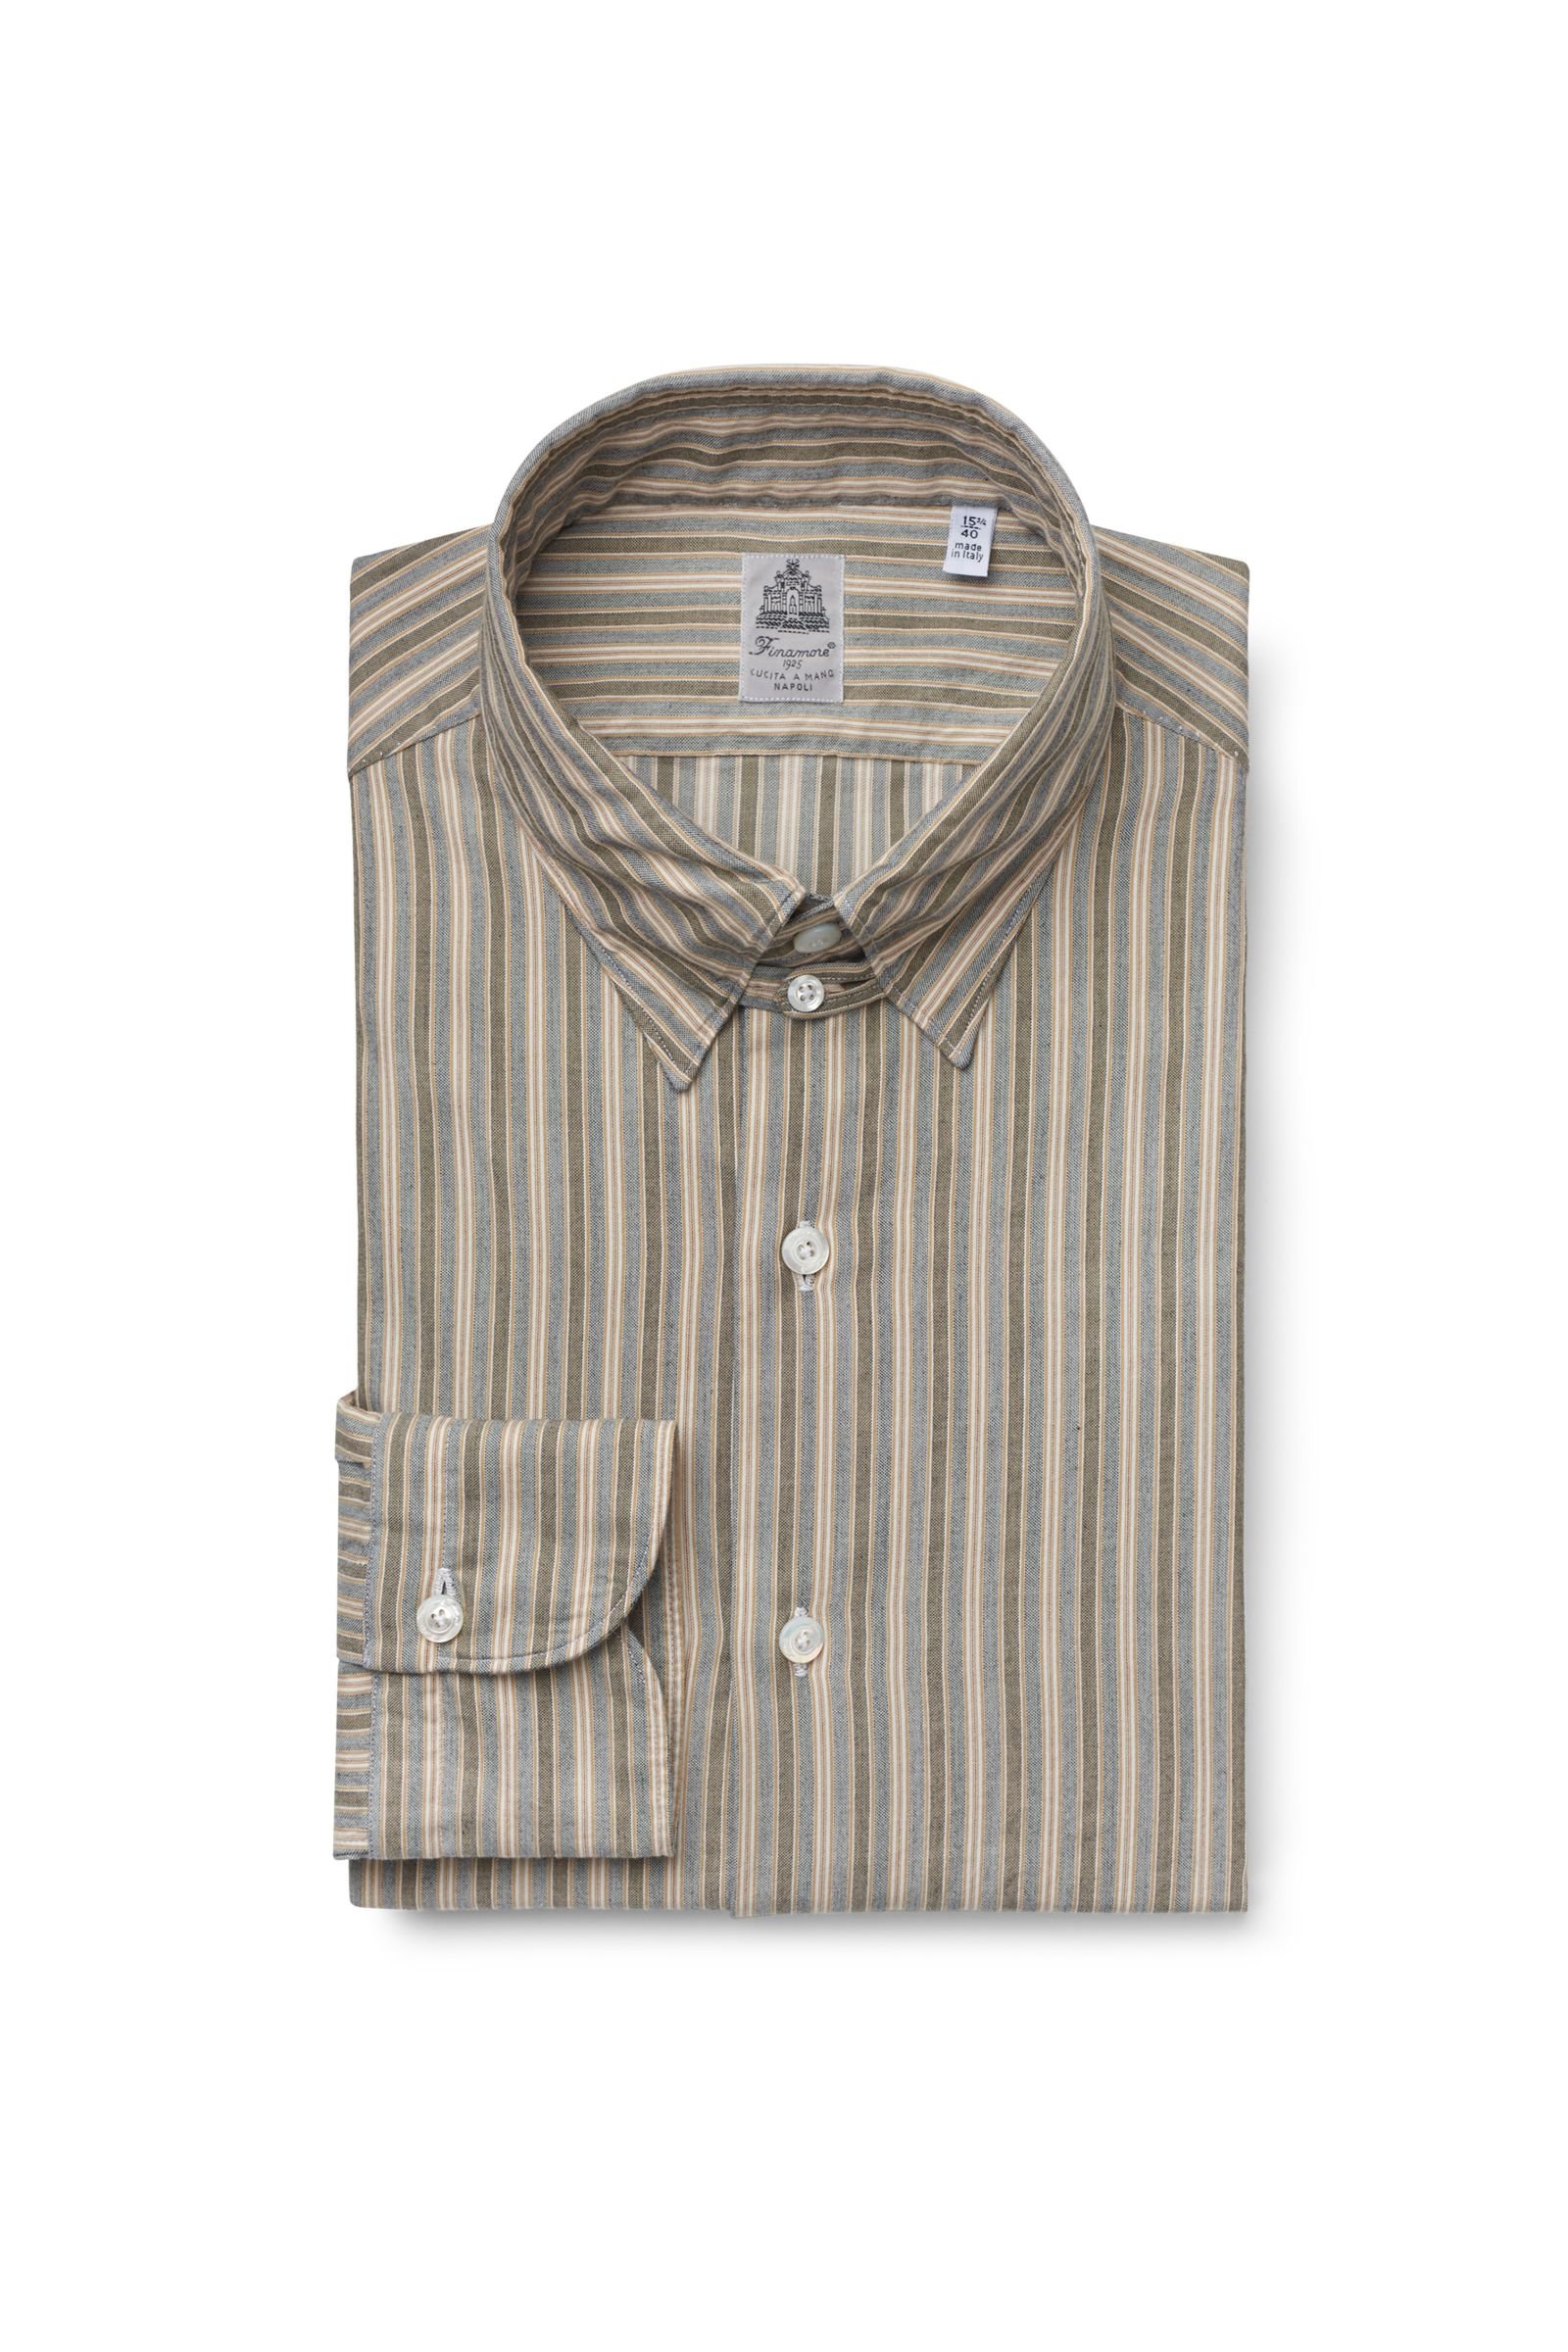 Business shirt 'Seattle' tab collar khaki/grey striped